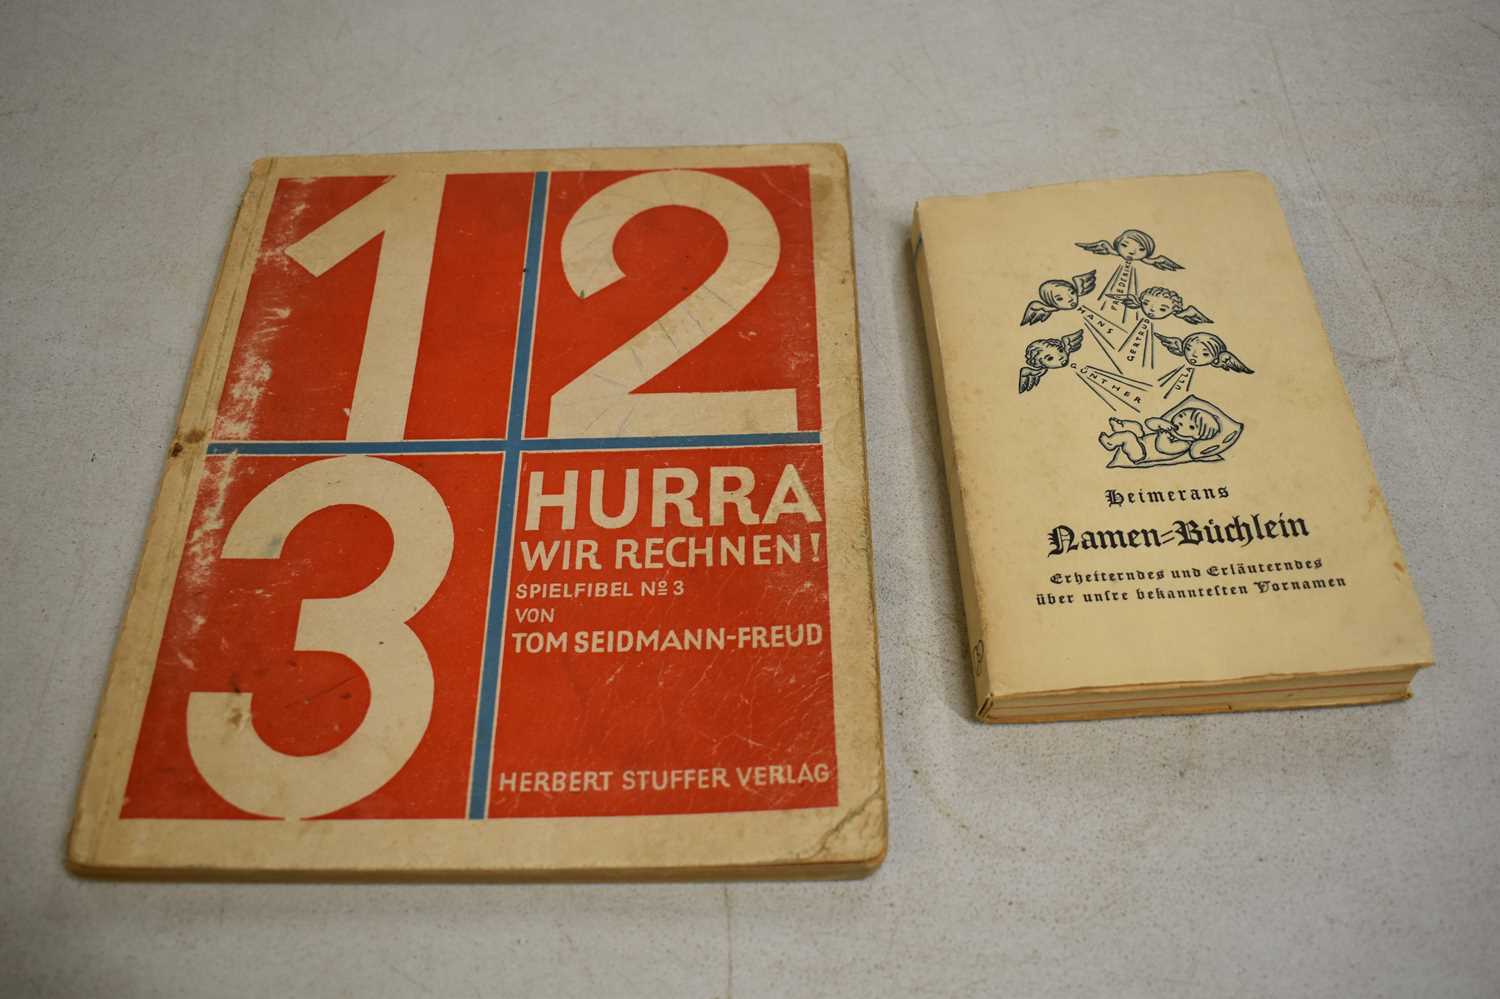 Tom Seidmann-Freud "Hurra, Wir Rechnen! (Hooray we Calculate)", 1946 first edition in original wraps